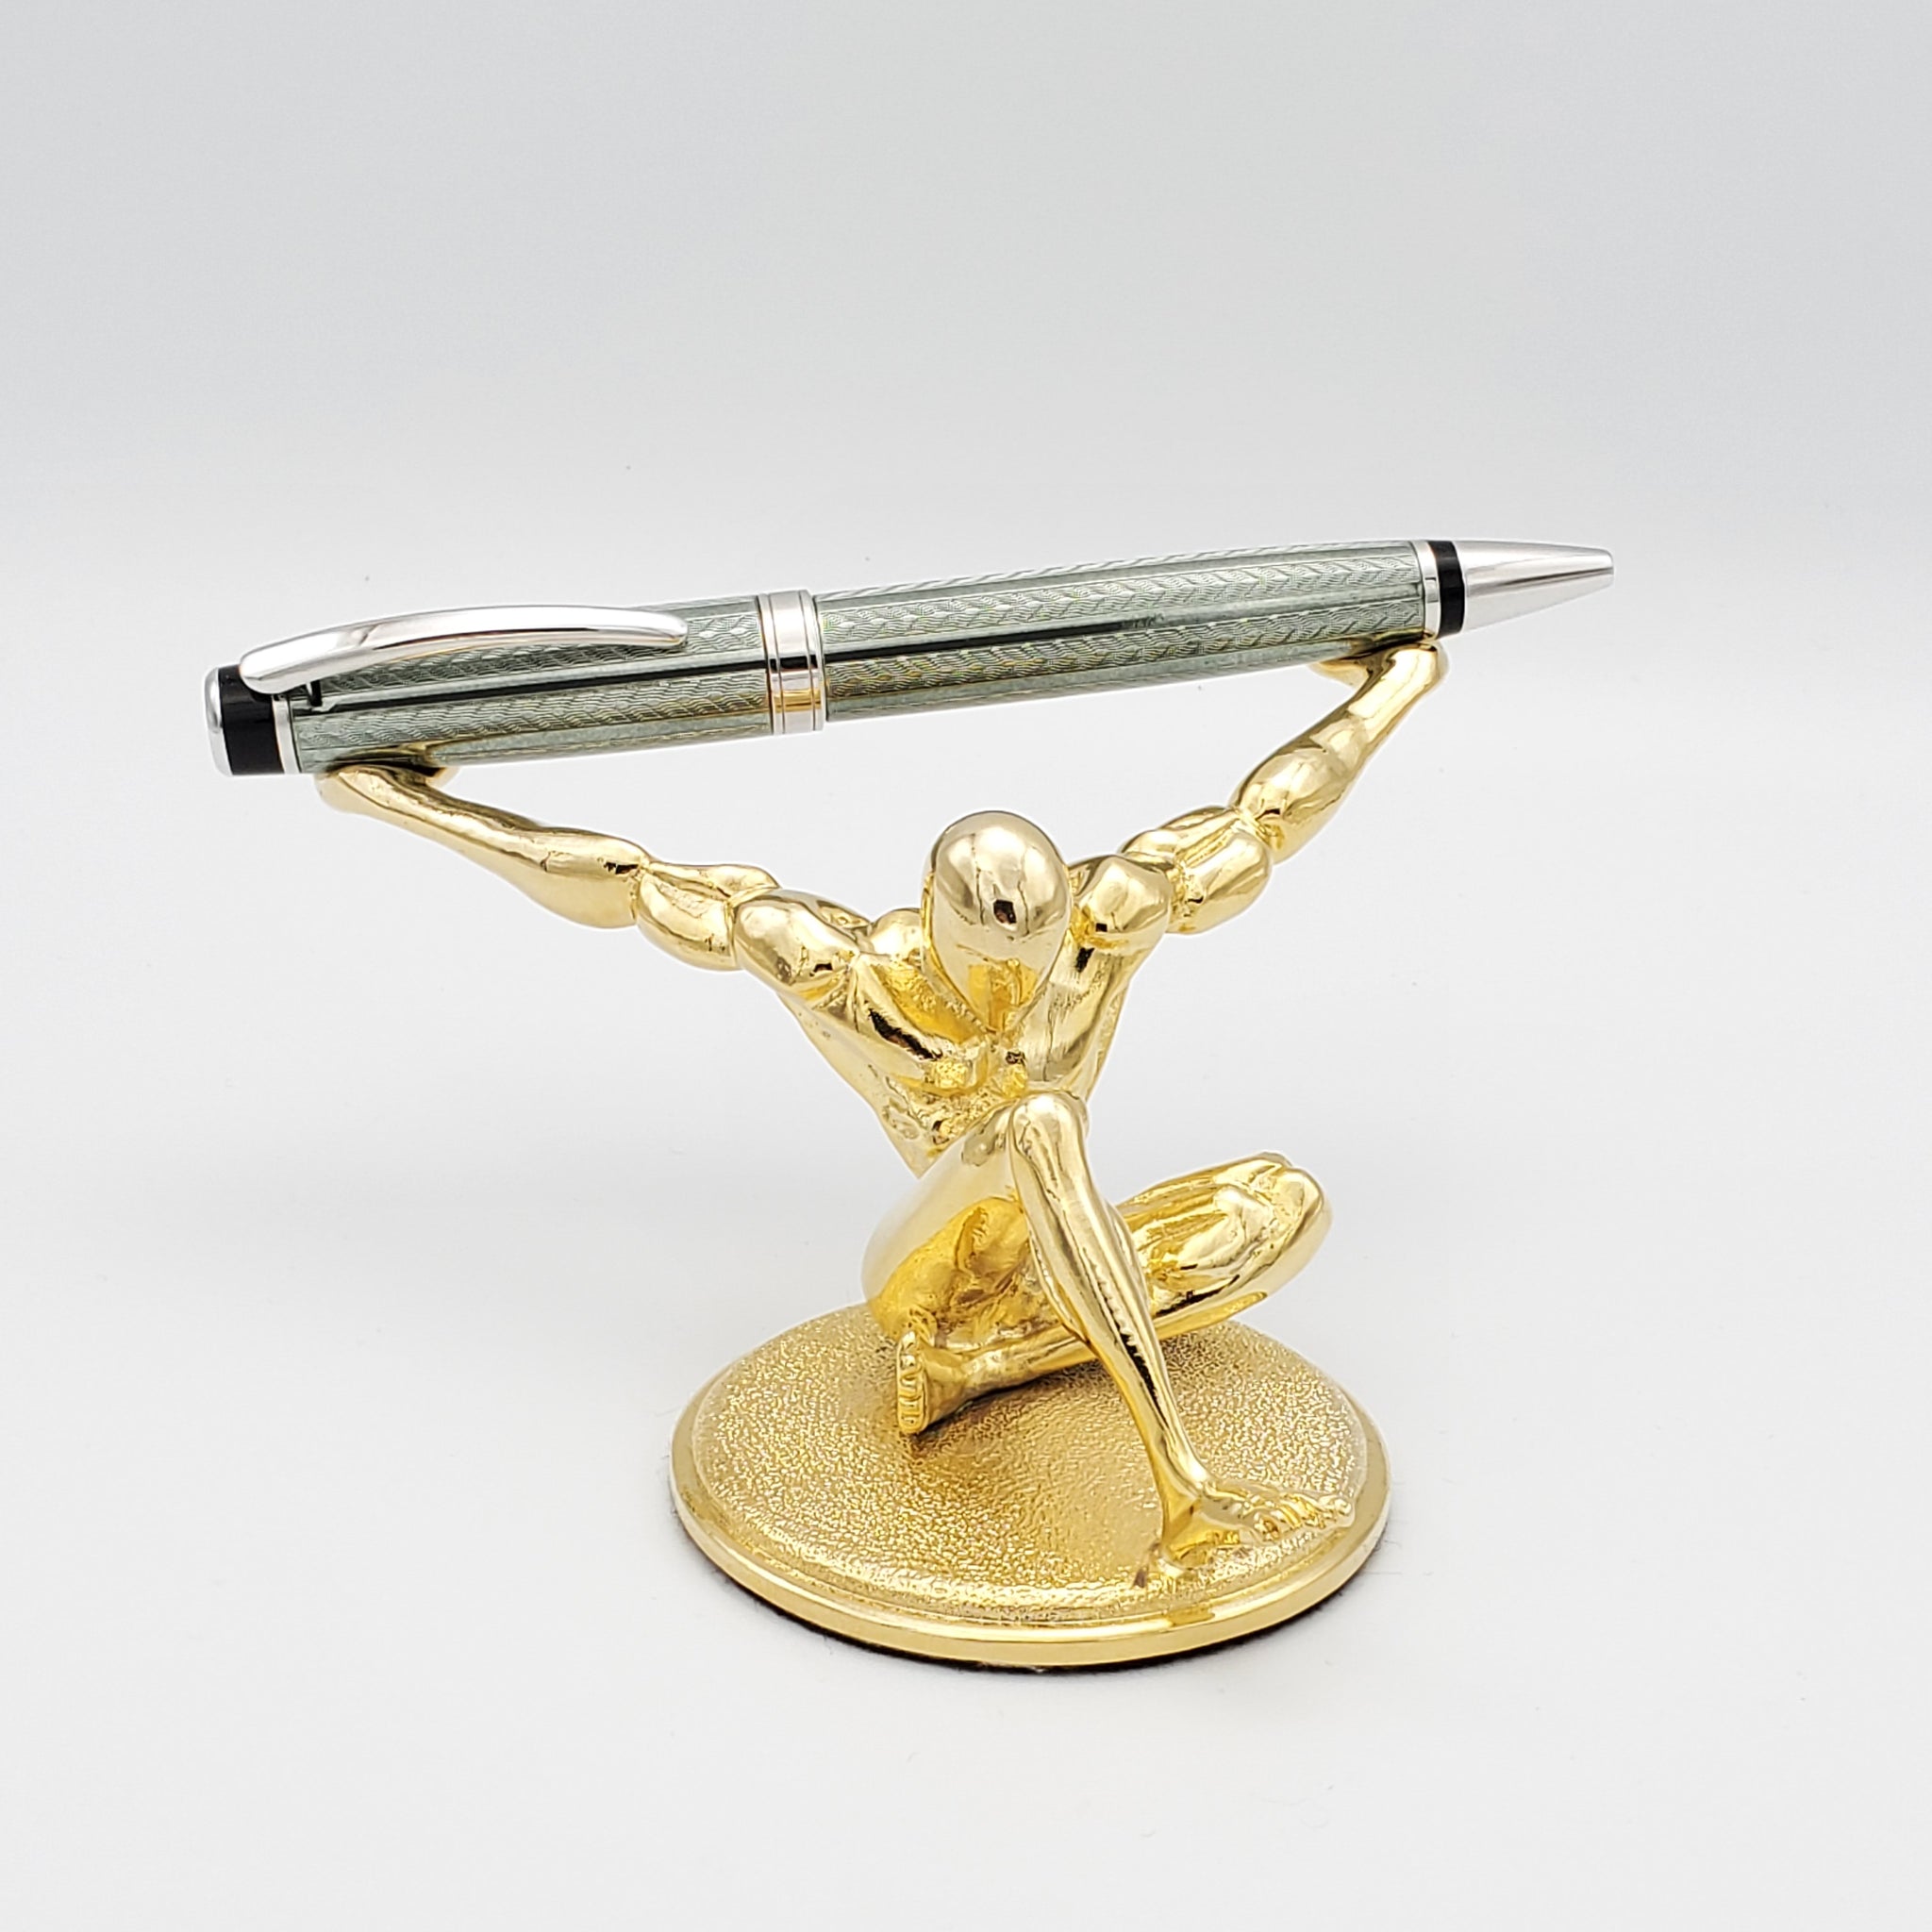 Jac Zagoory Jac Zagoory Designs Atlas Gold Full Size Pen Holder (PH36GPA) freeshipping - RiNo Distribution